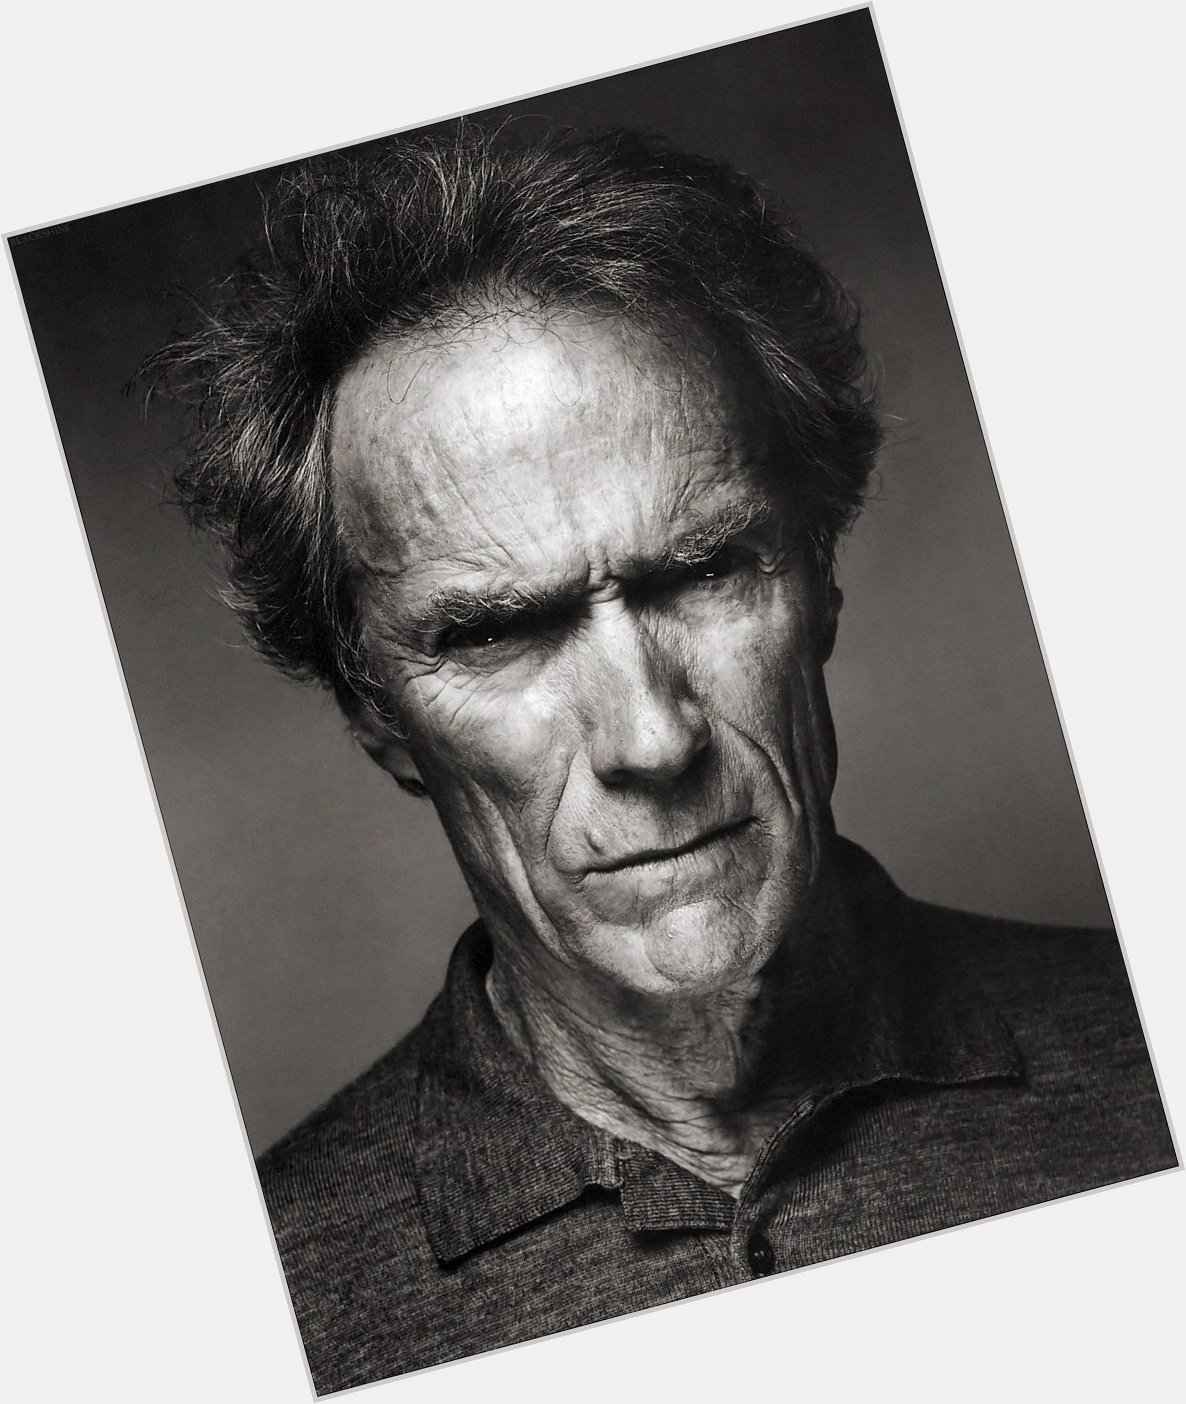 Happy Bday, Clint Eastwood! 